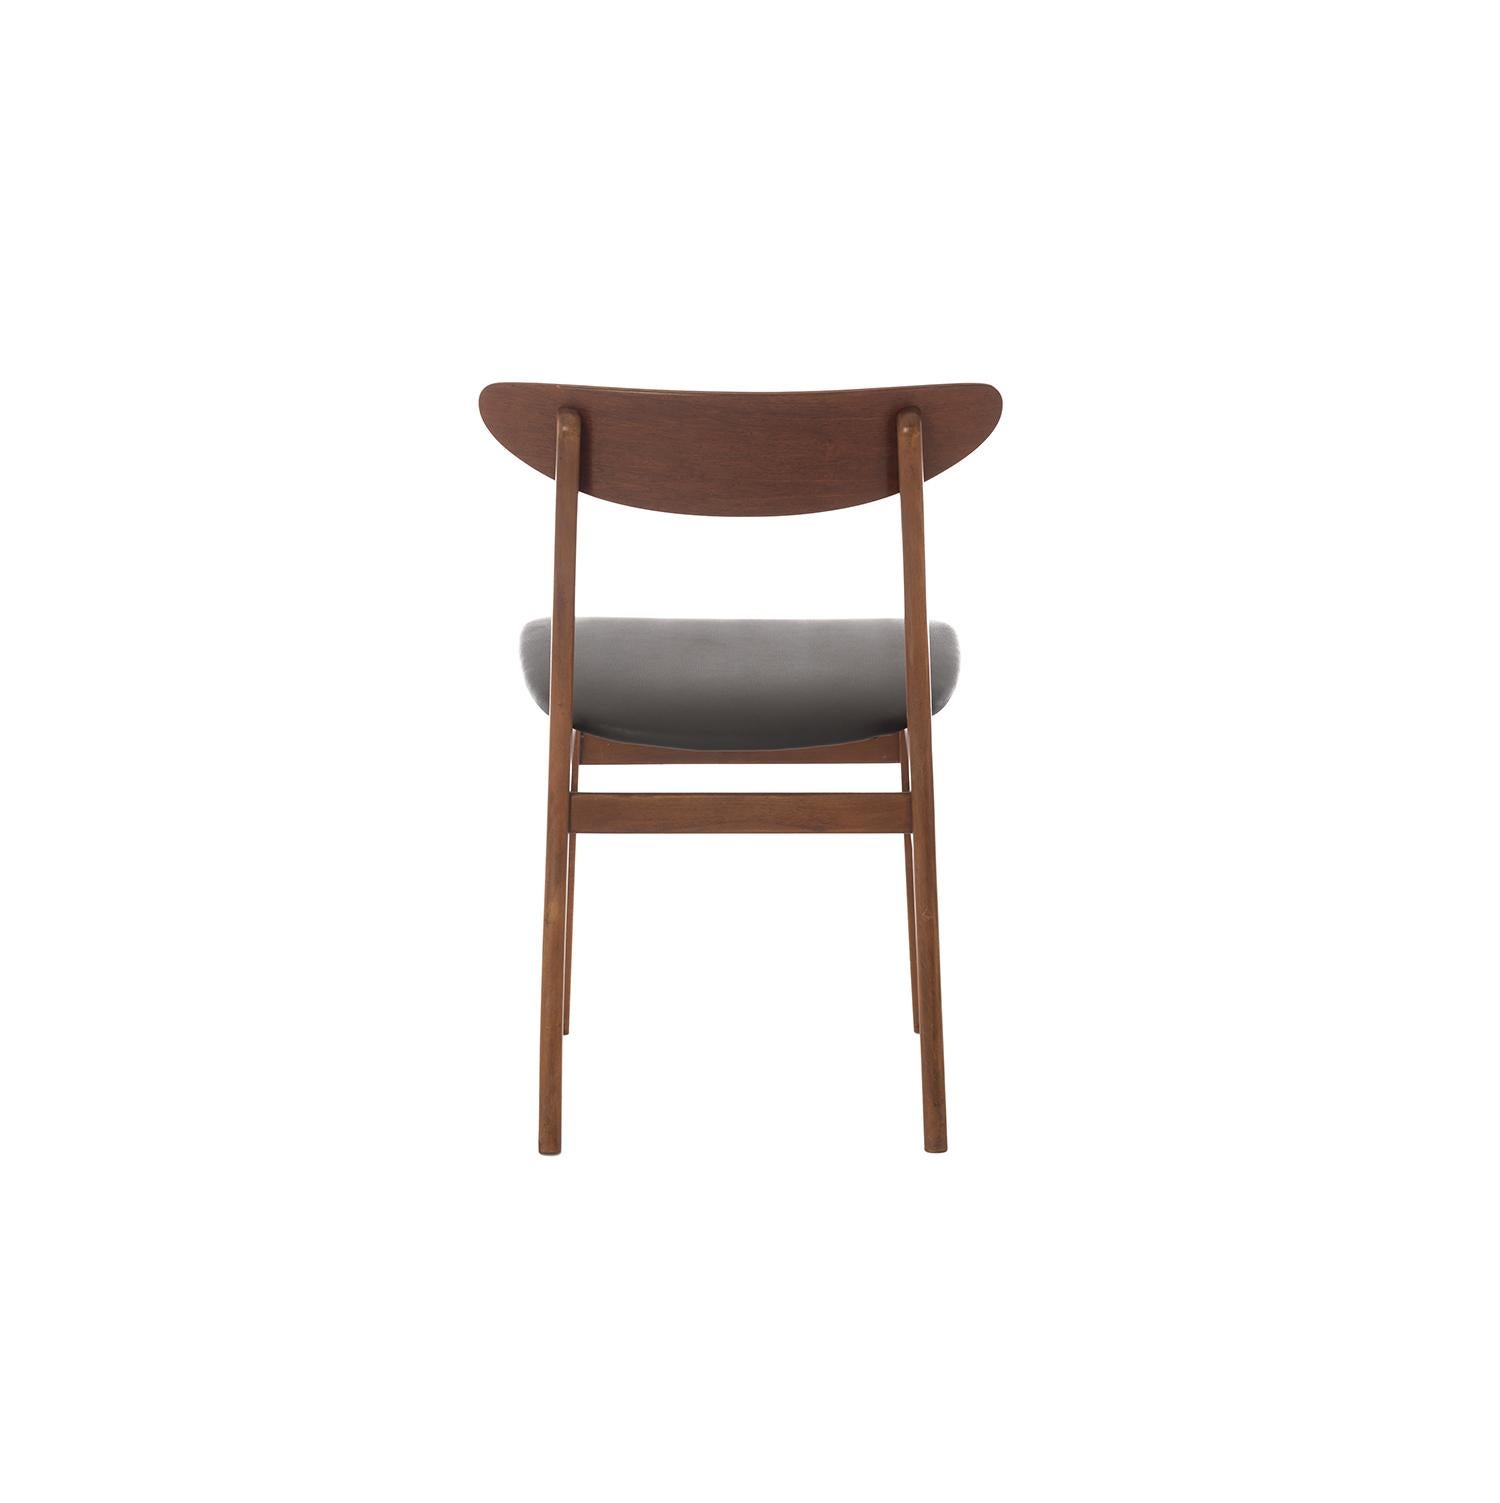 20th Century Scandinavian Modern Vintage Teak Dining Chairs